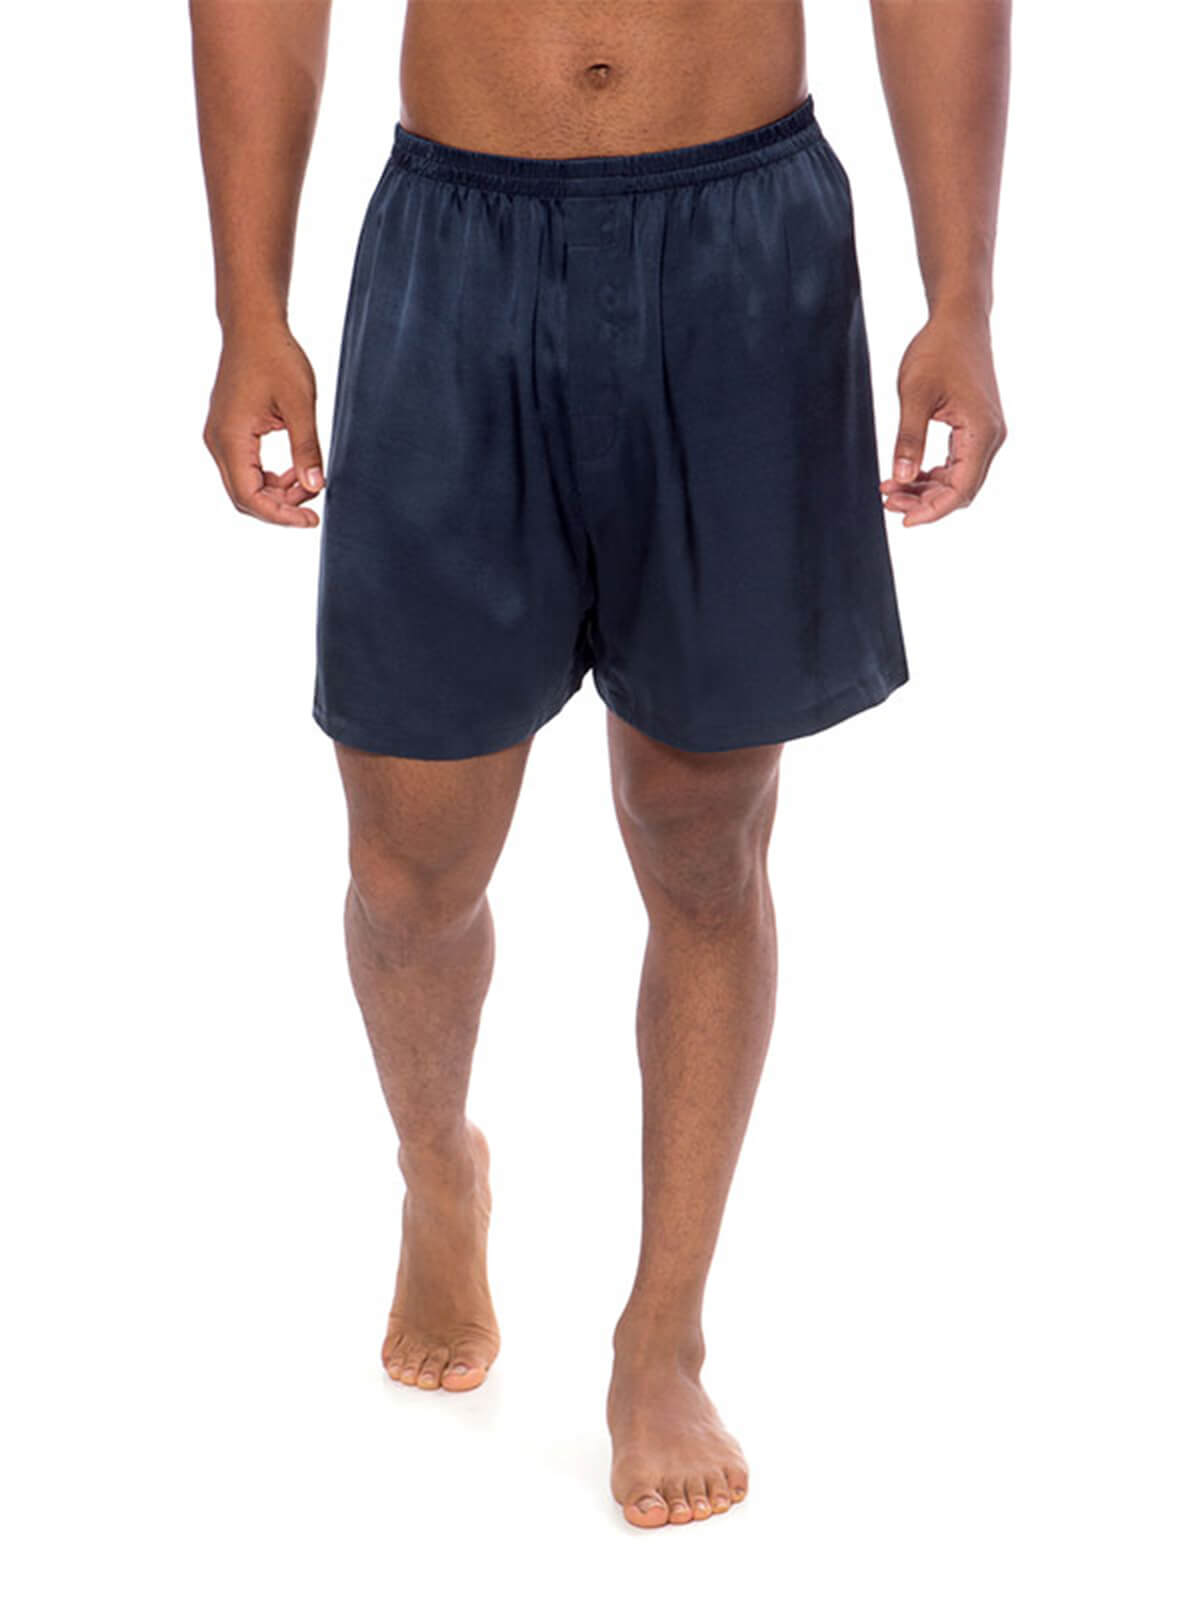 Men's Silk Sleepwear Boxer Shorts - Black